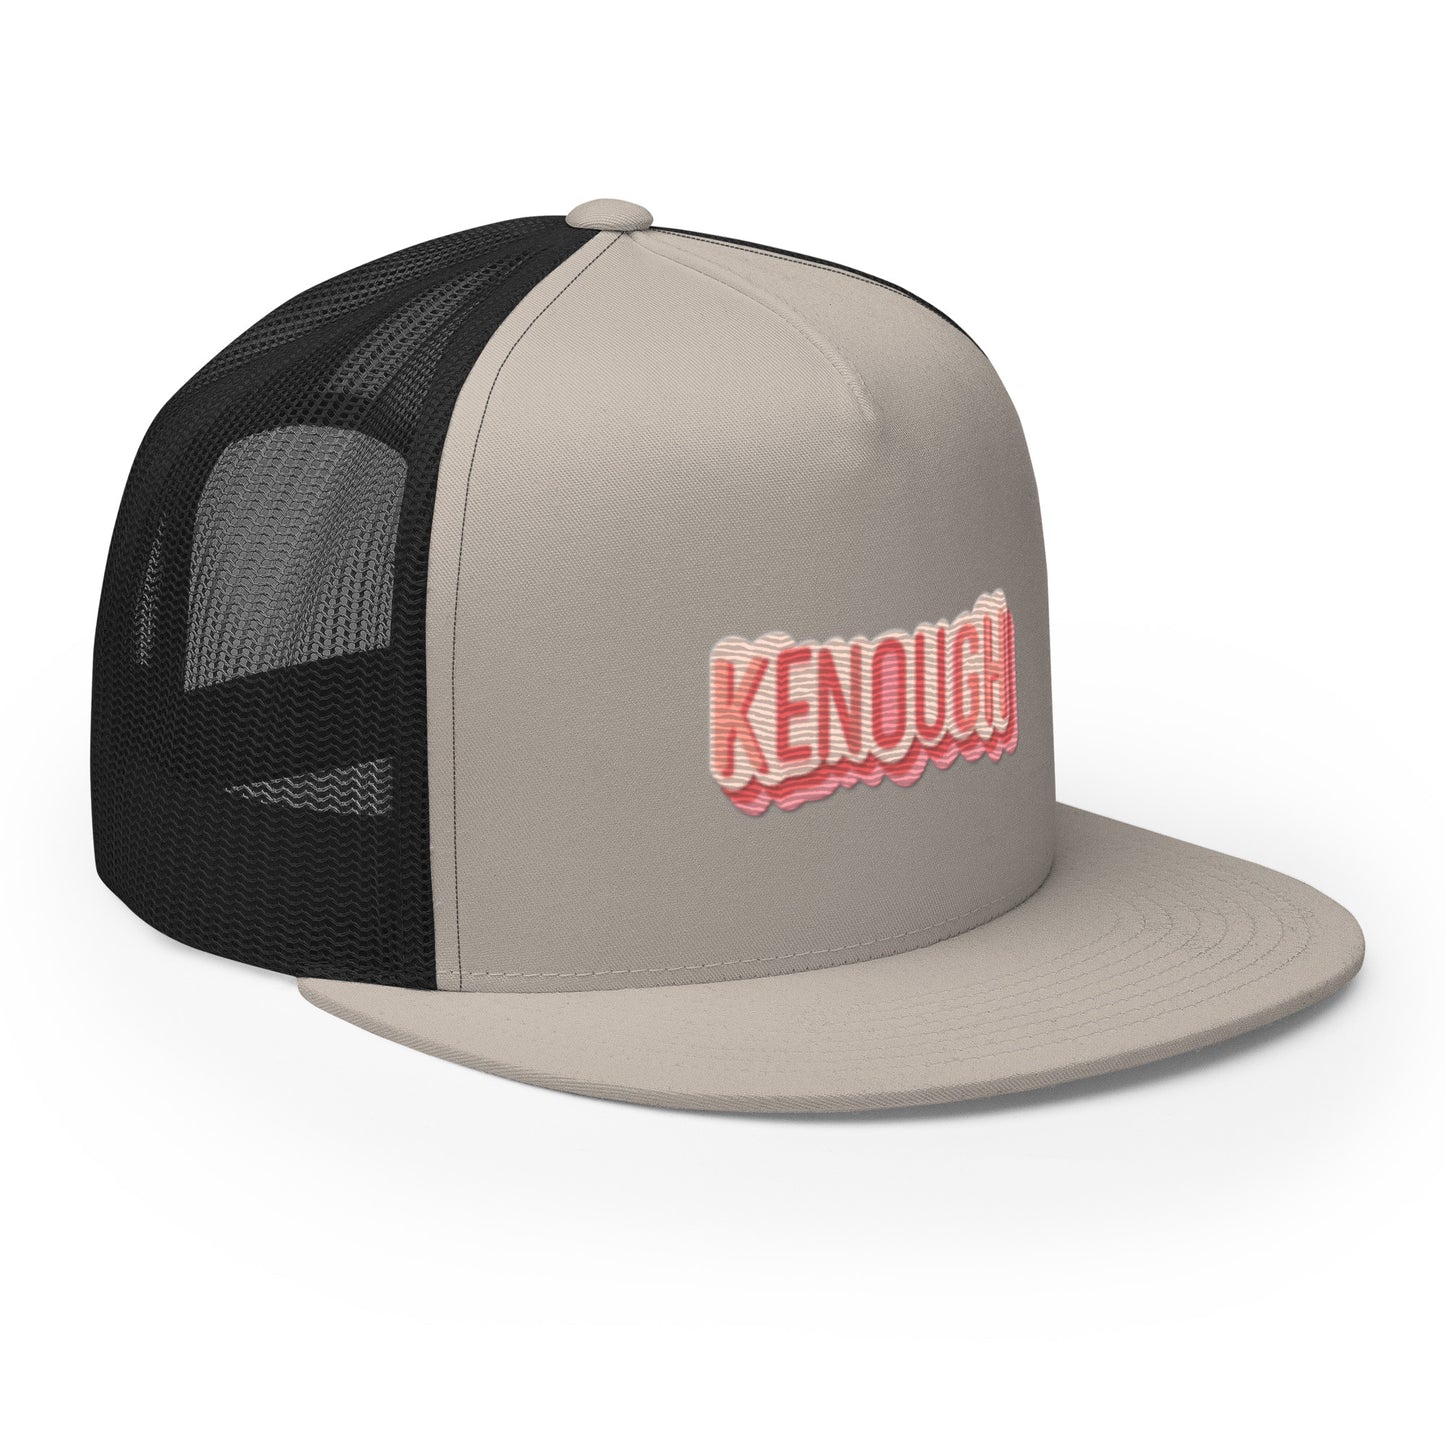 Kenough Trucker Cap